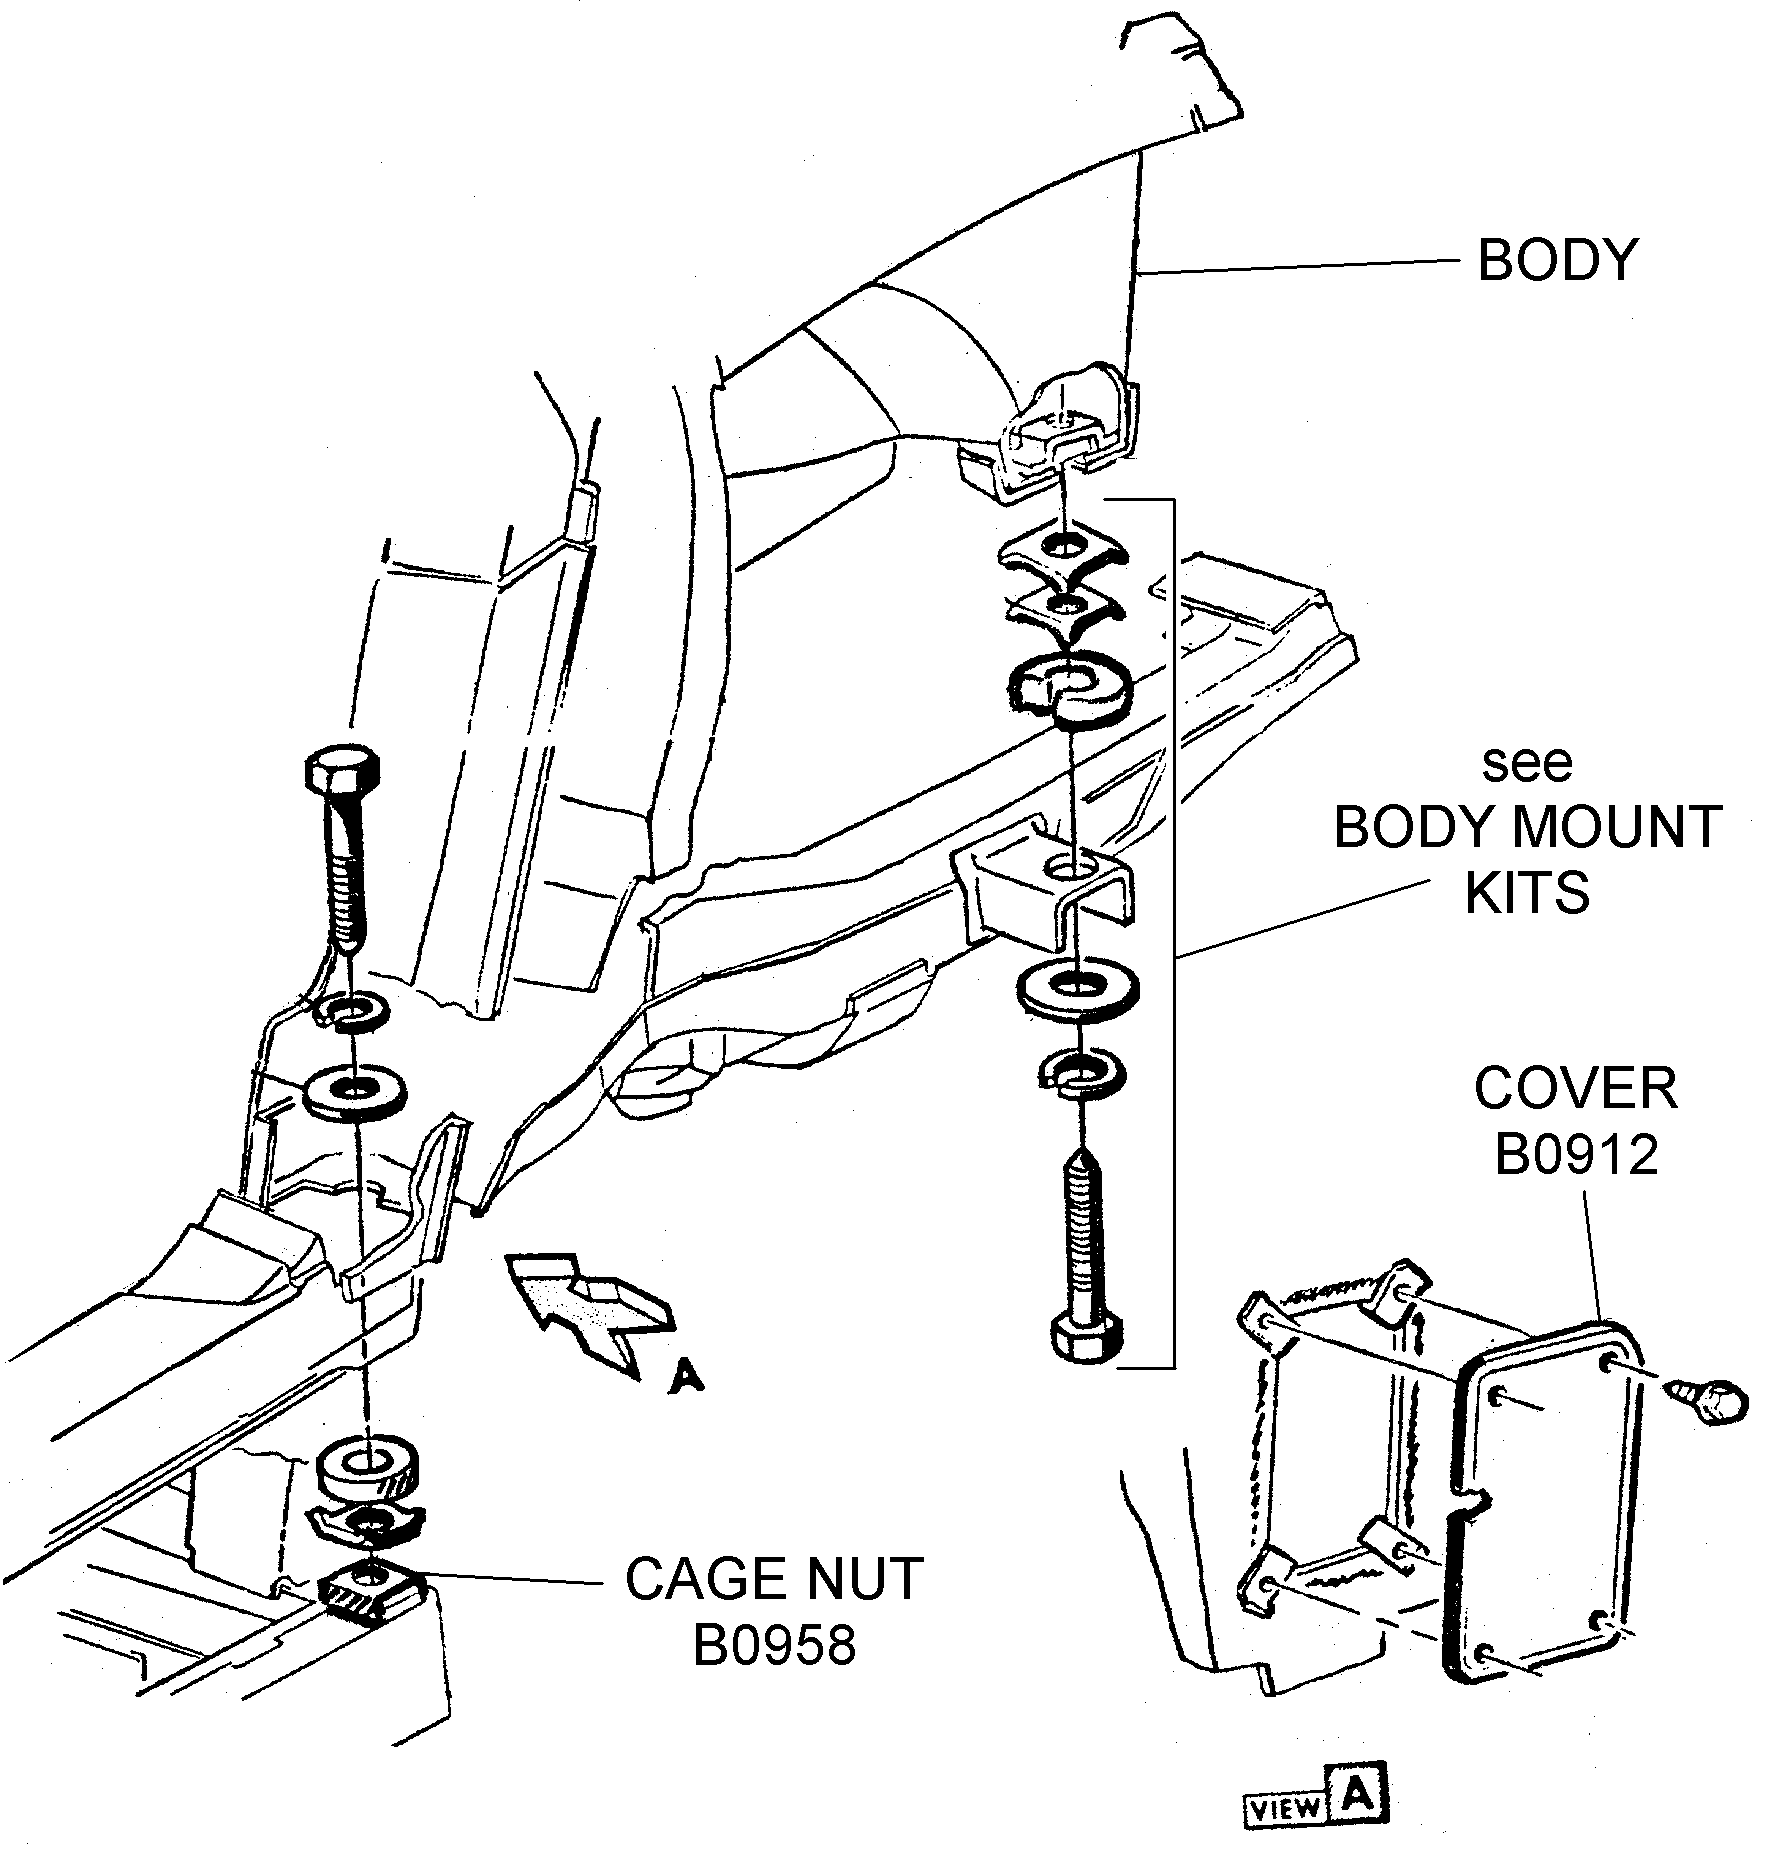 Body Mount Components Diagram View Chicago Corvette Supply